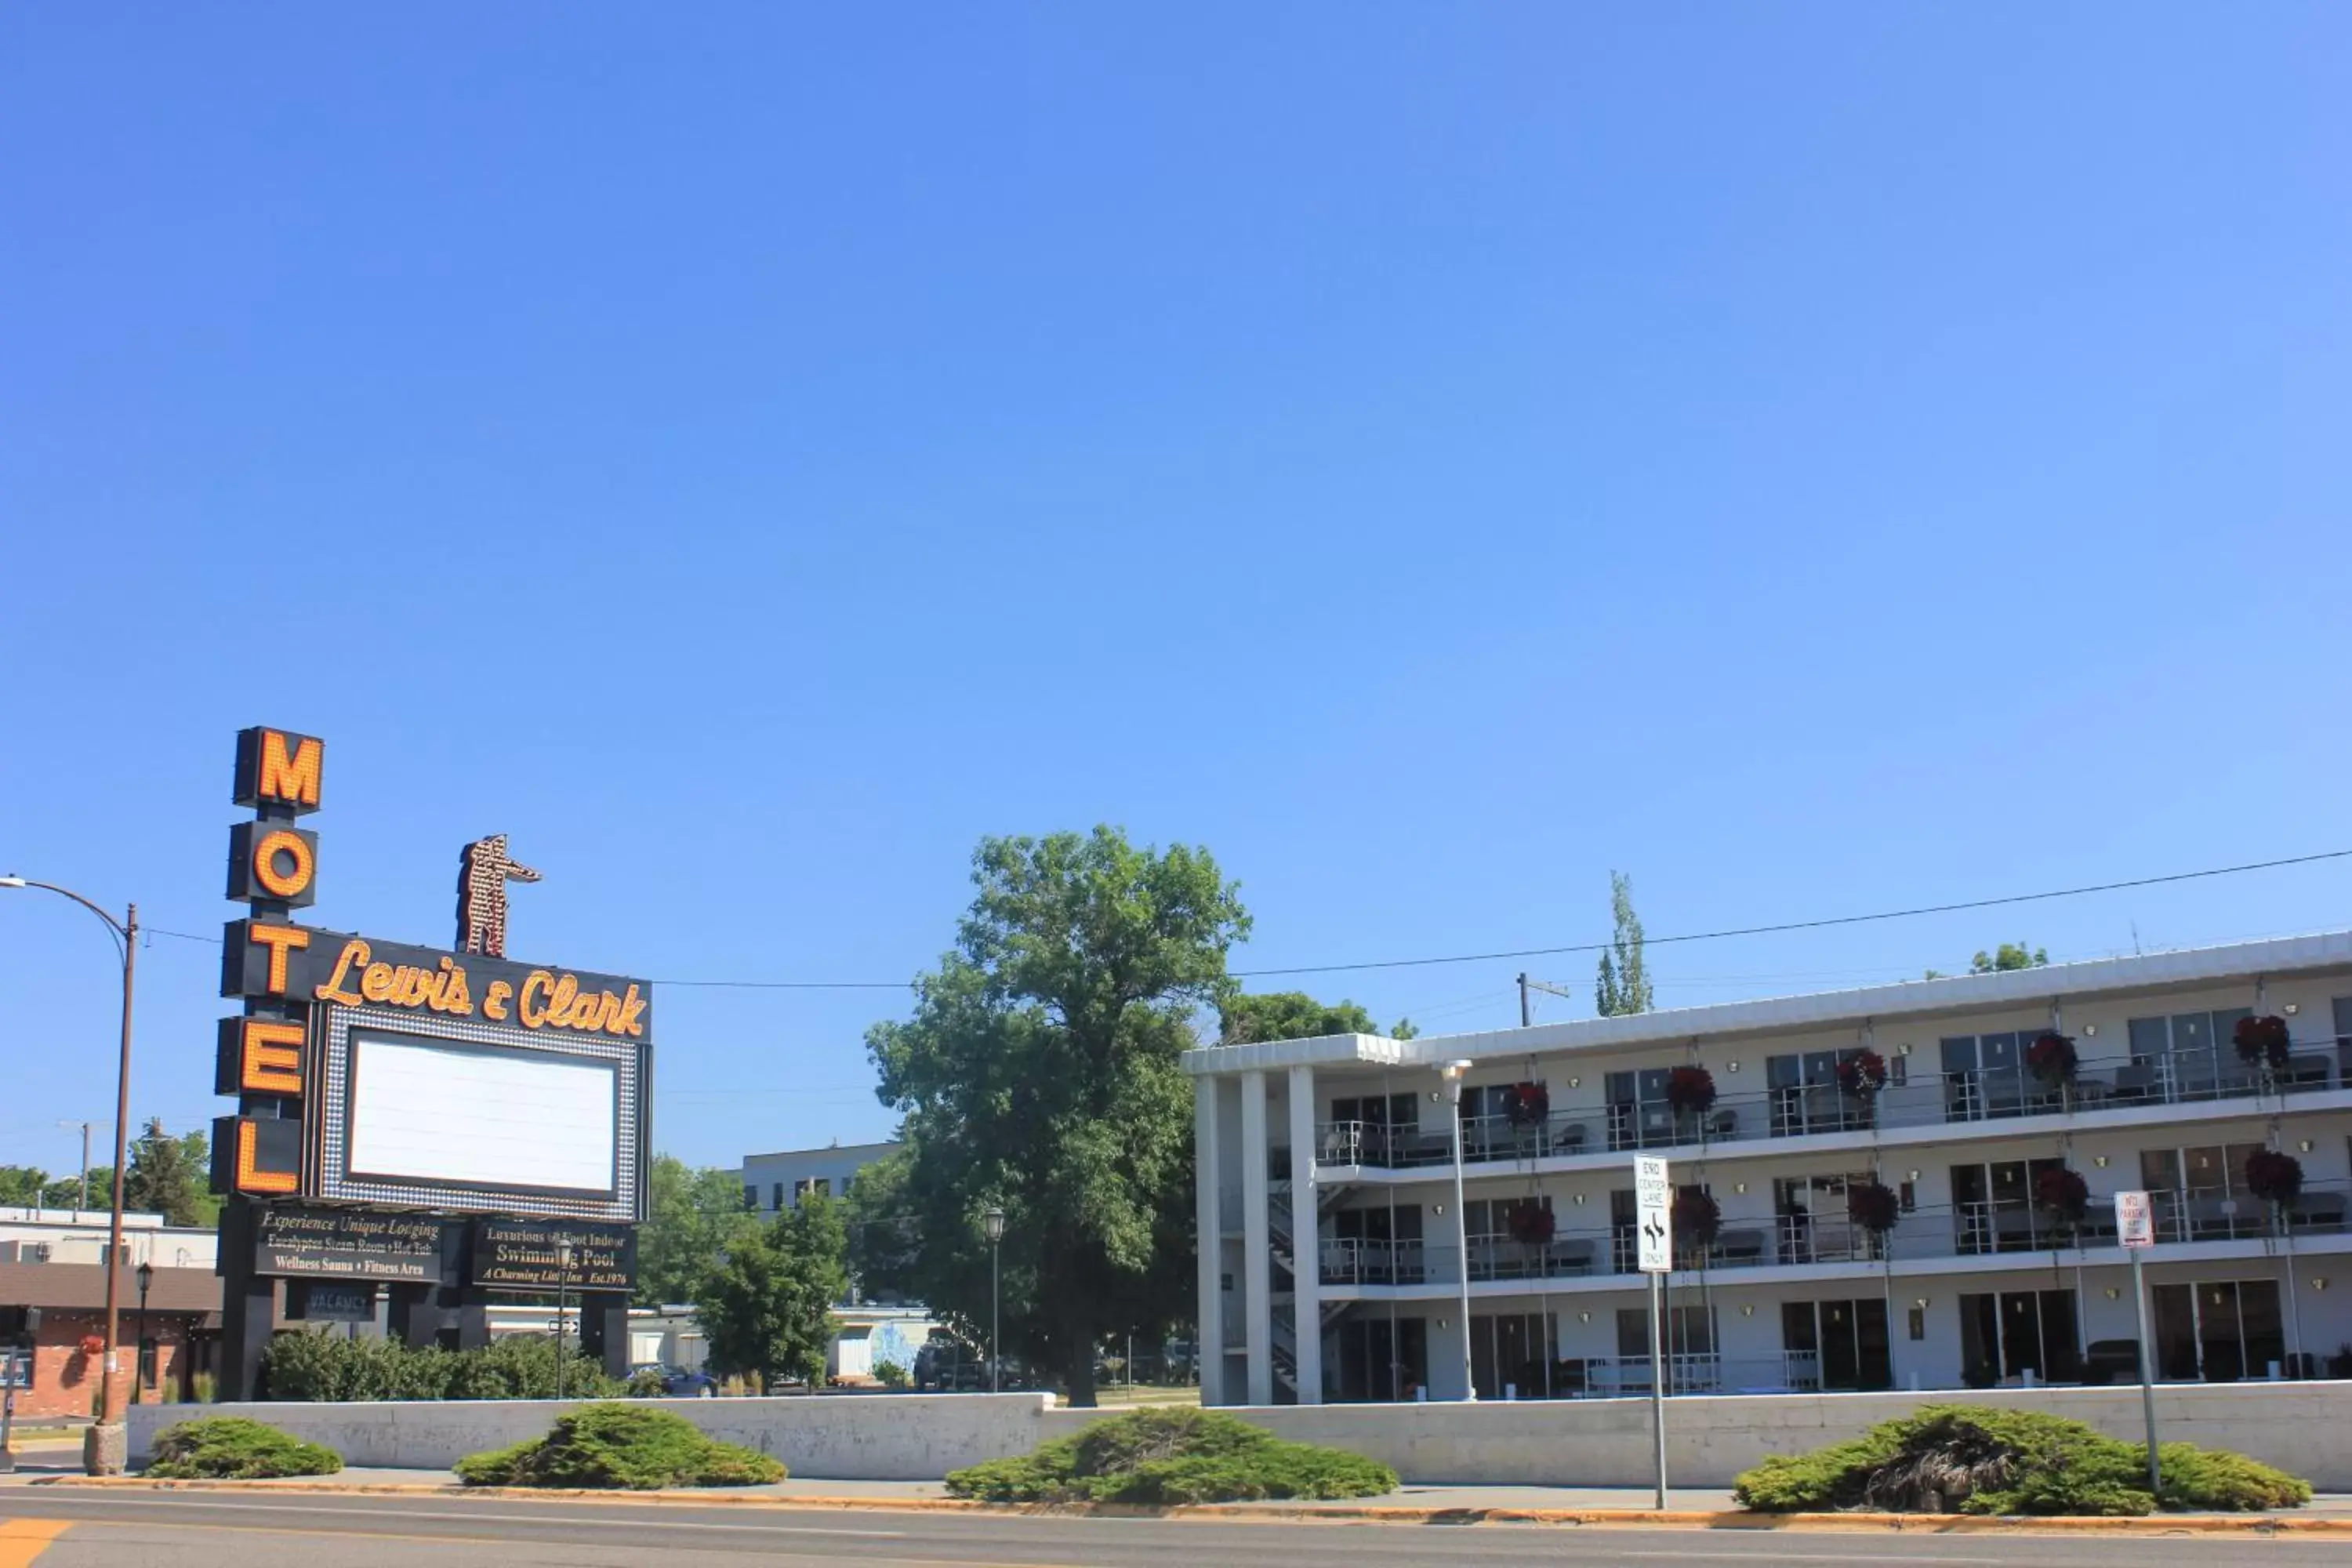 Property Building in Bozeman Lewis & Clark Motel